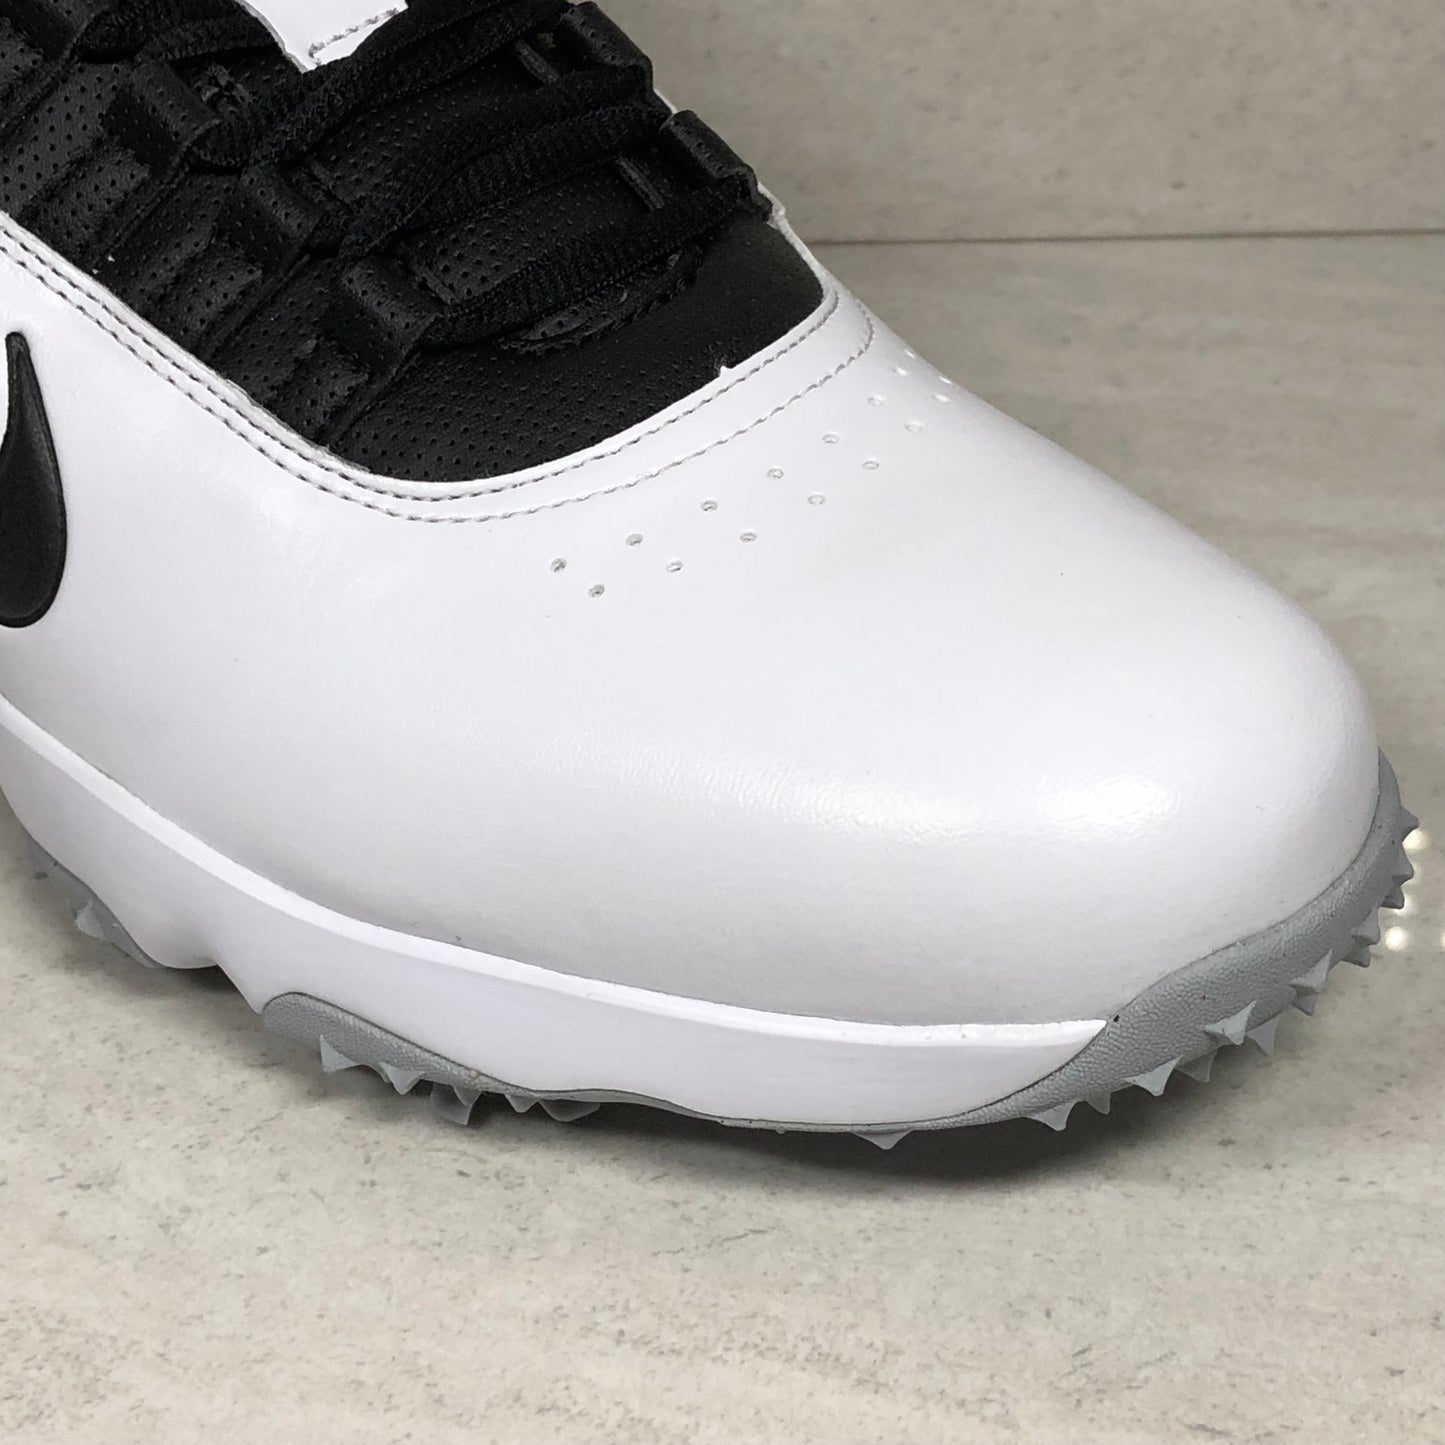 Nike Air Zoom Rival Golf Zapatos Tamaño 14 Blanco/Negro 878957 100